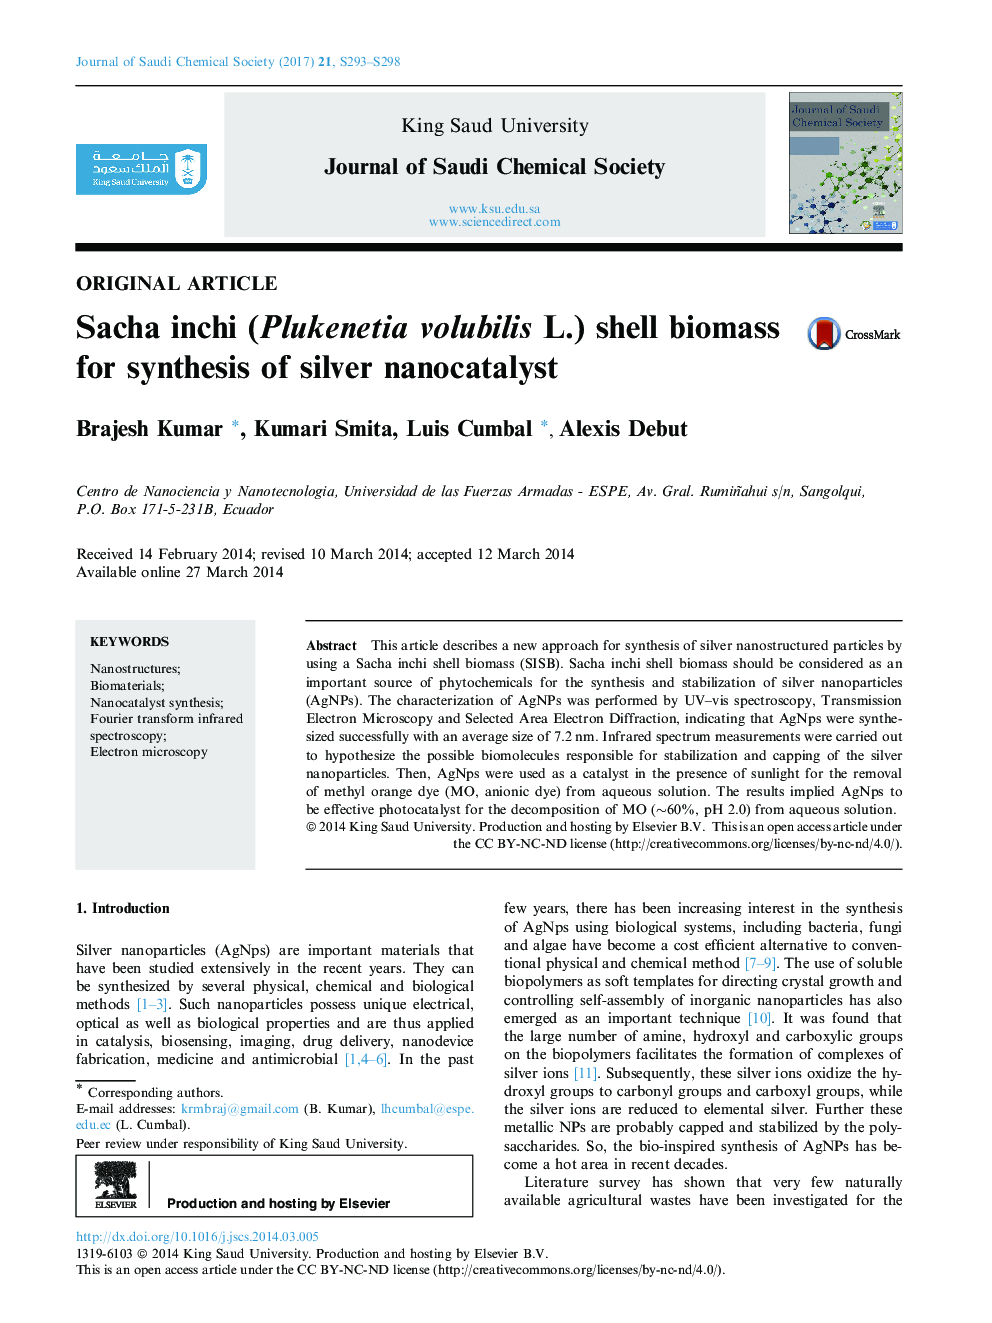 Sacha inchi (Plukenetia volubilis L.) shell biomass for synthesis of silver nanocatalyst